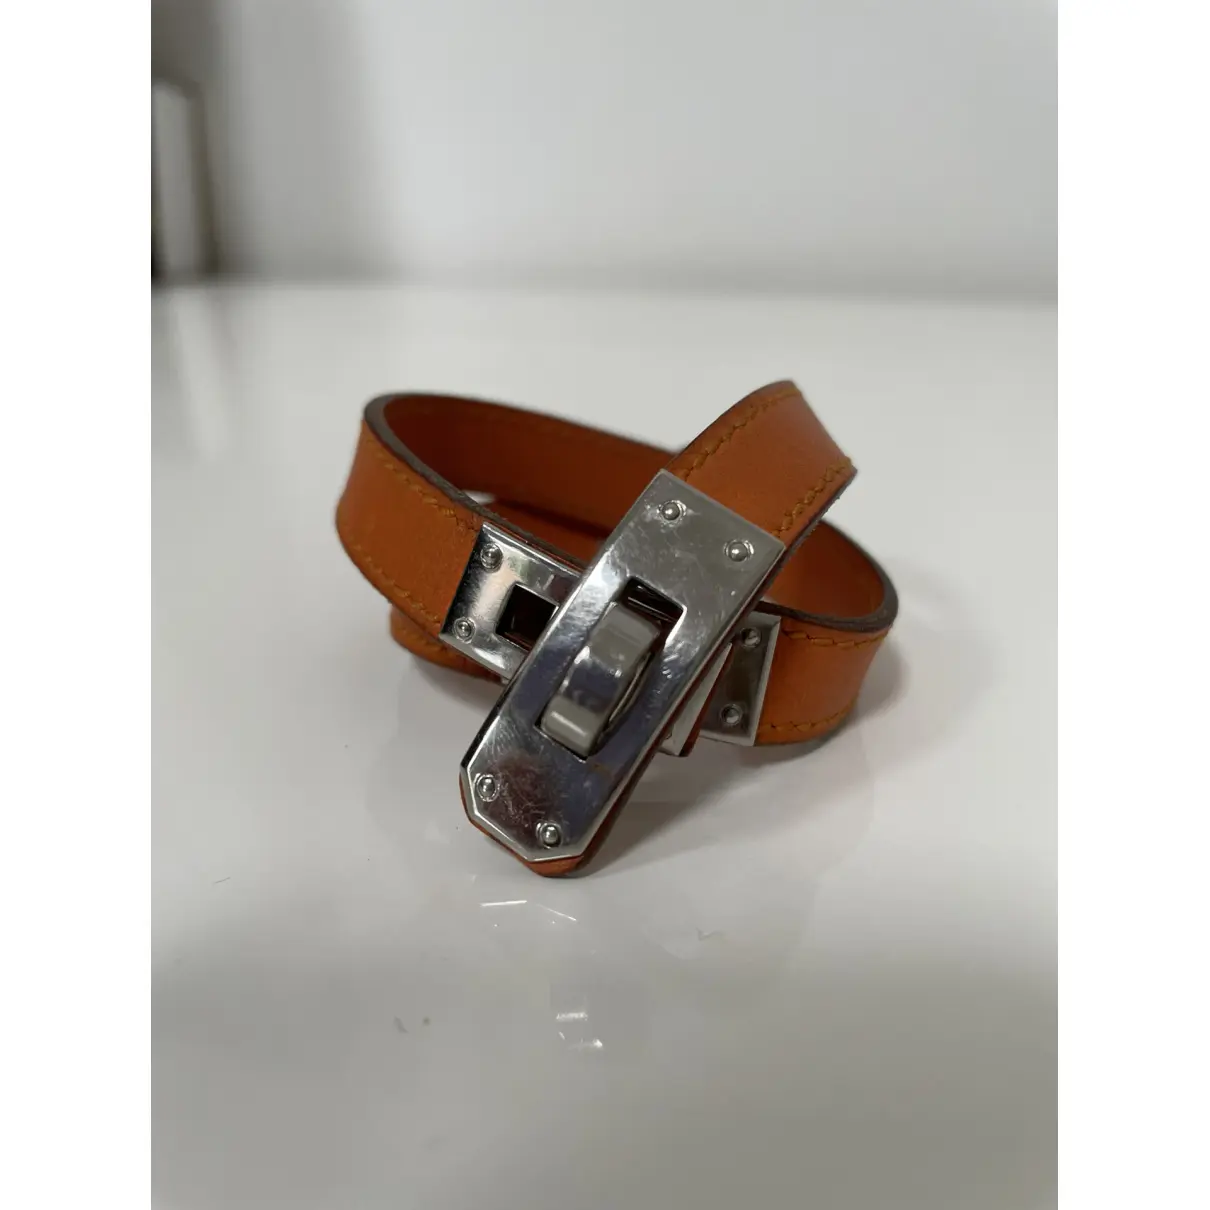 Buy Hermès Mini Kelly Double Tour leather bracelet online